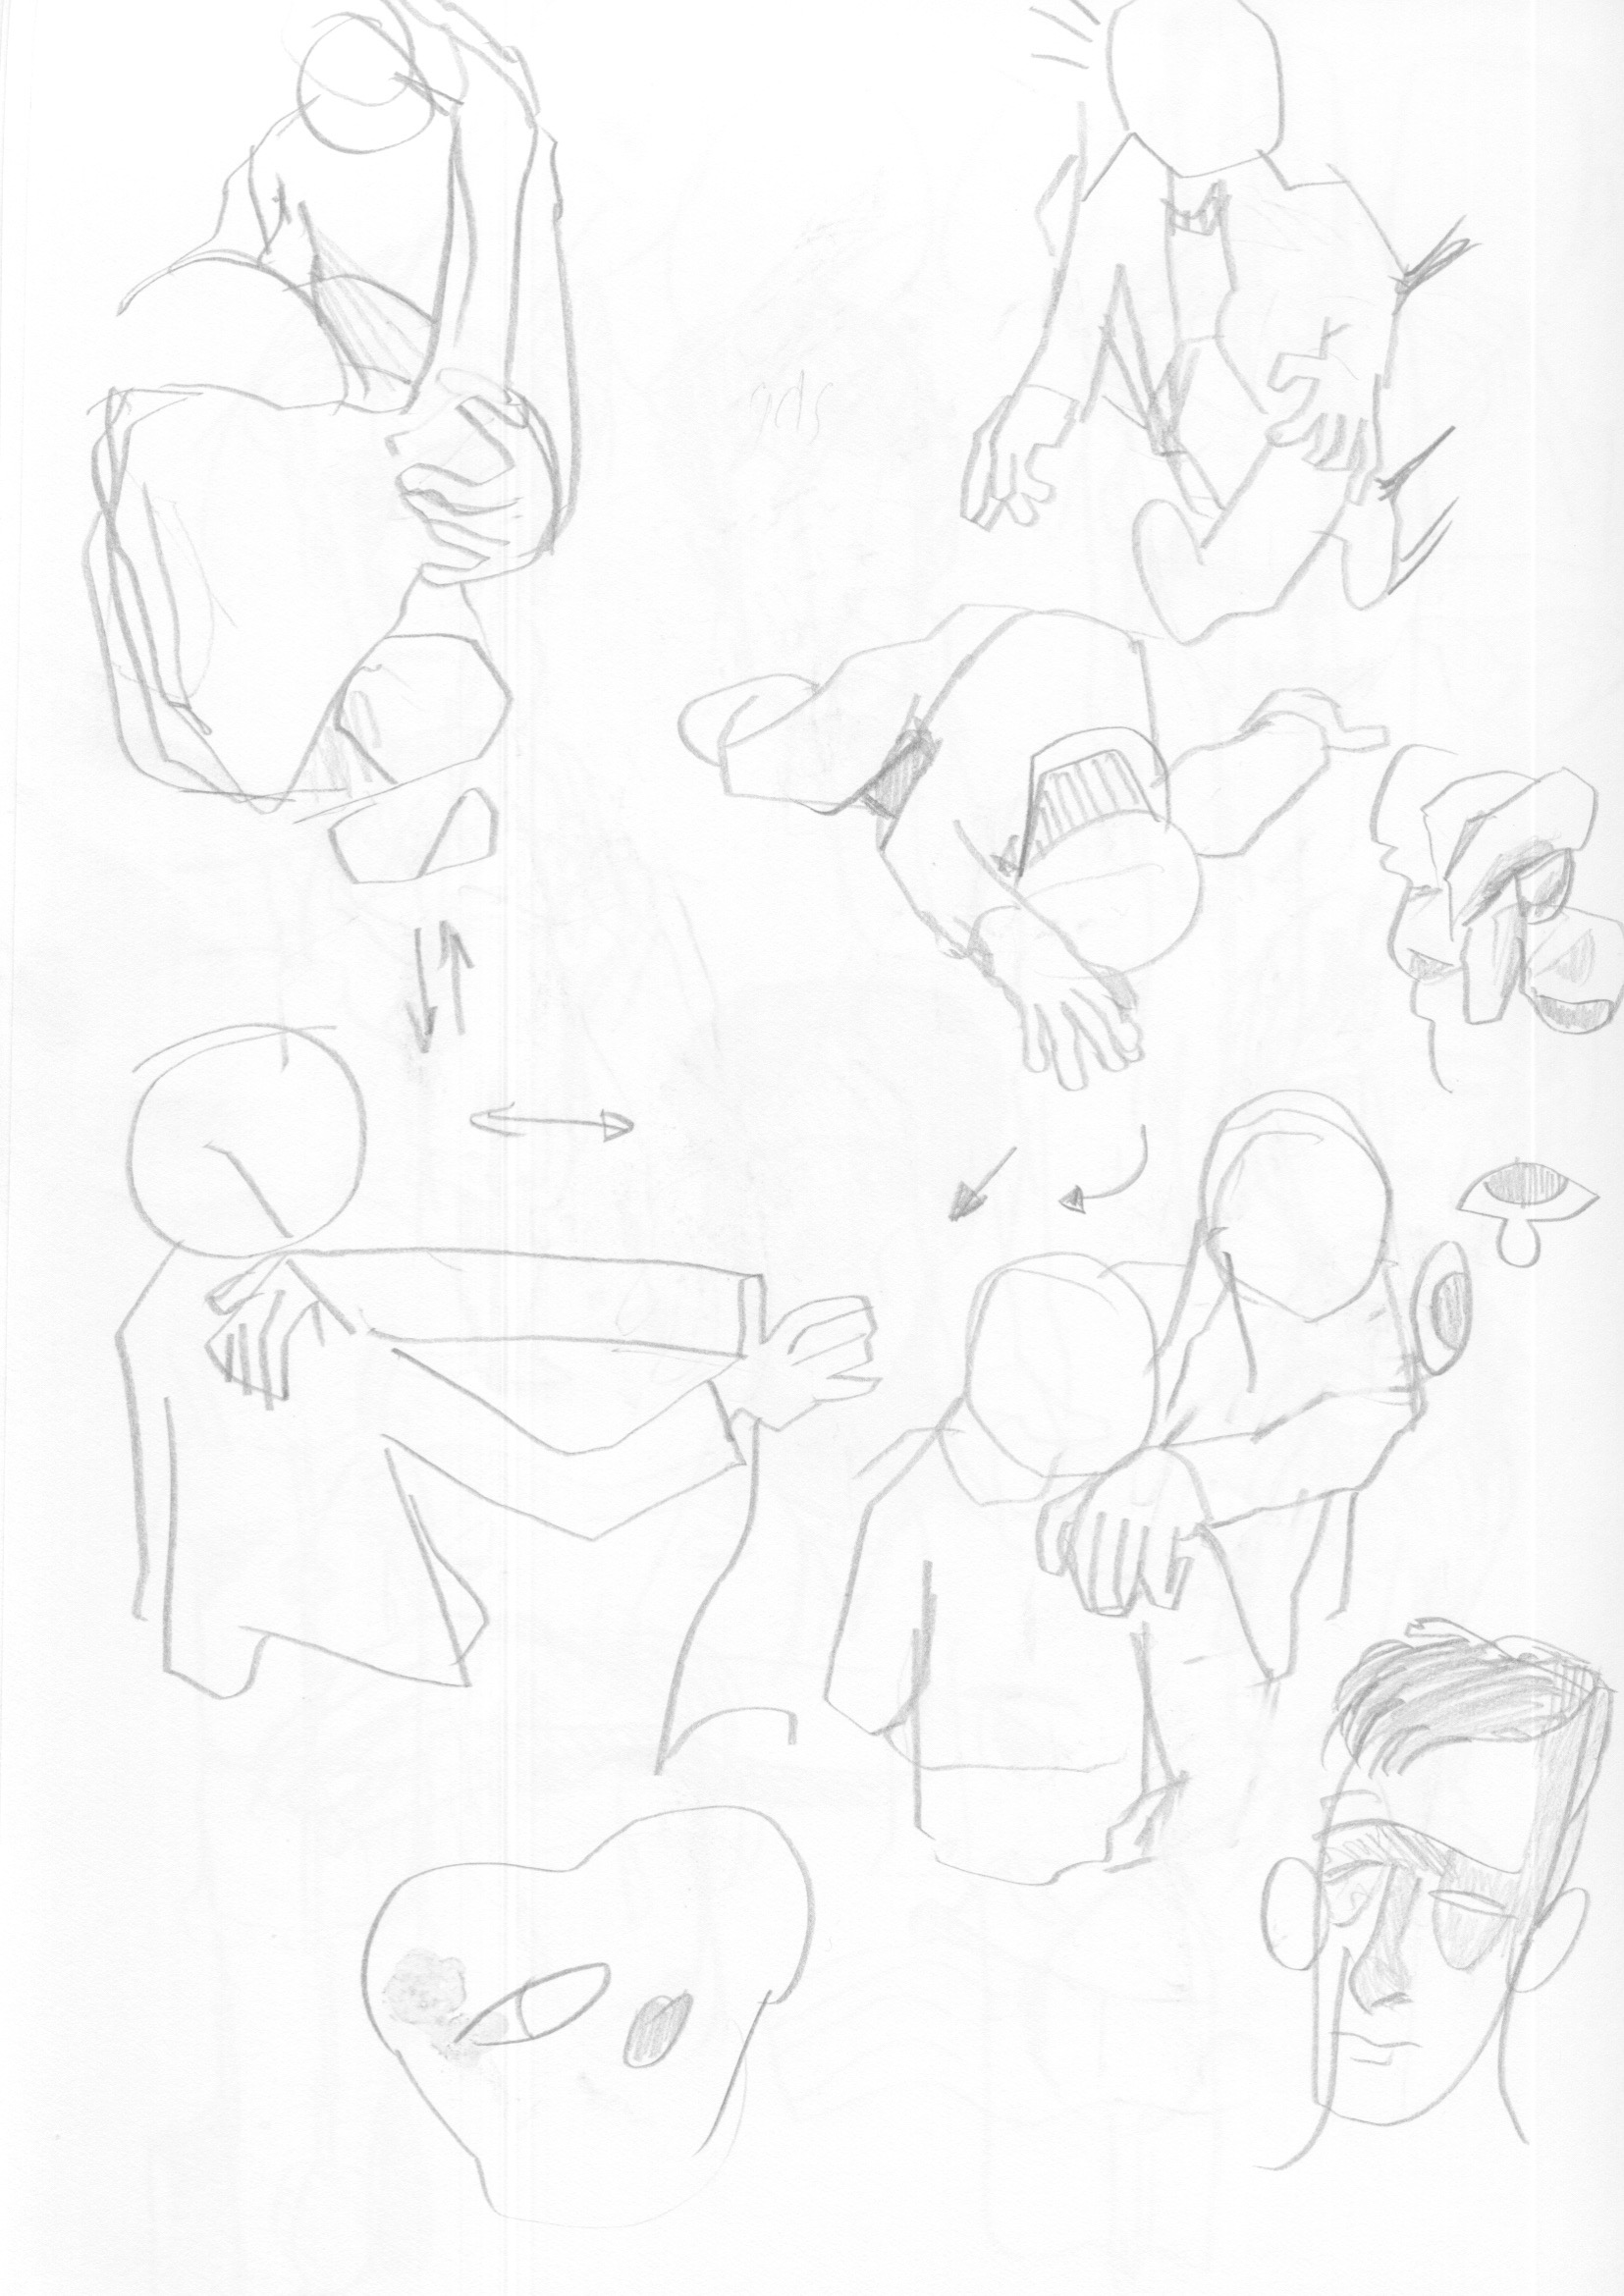 Sketchbook page 156